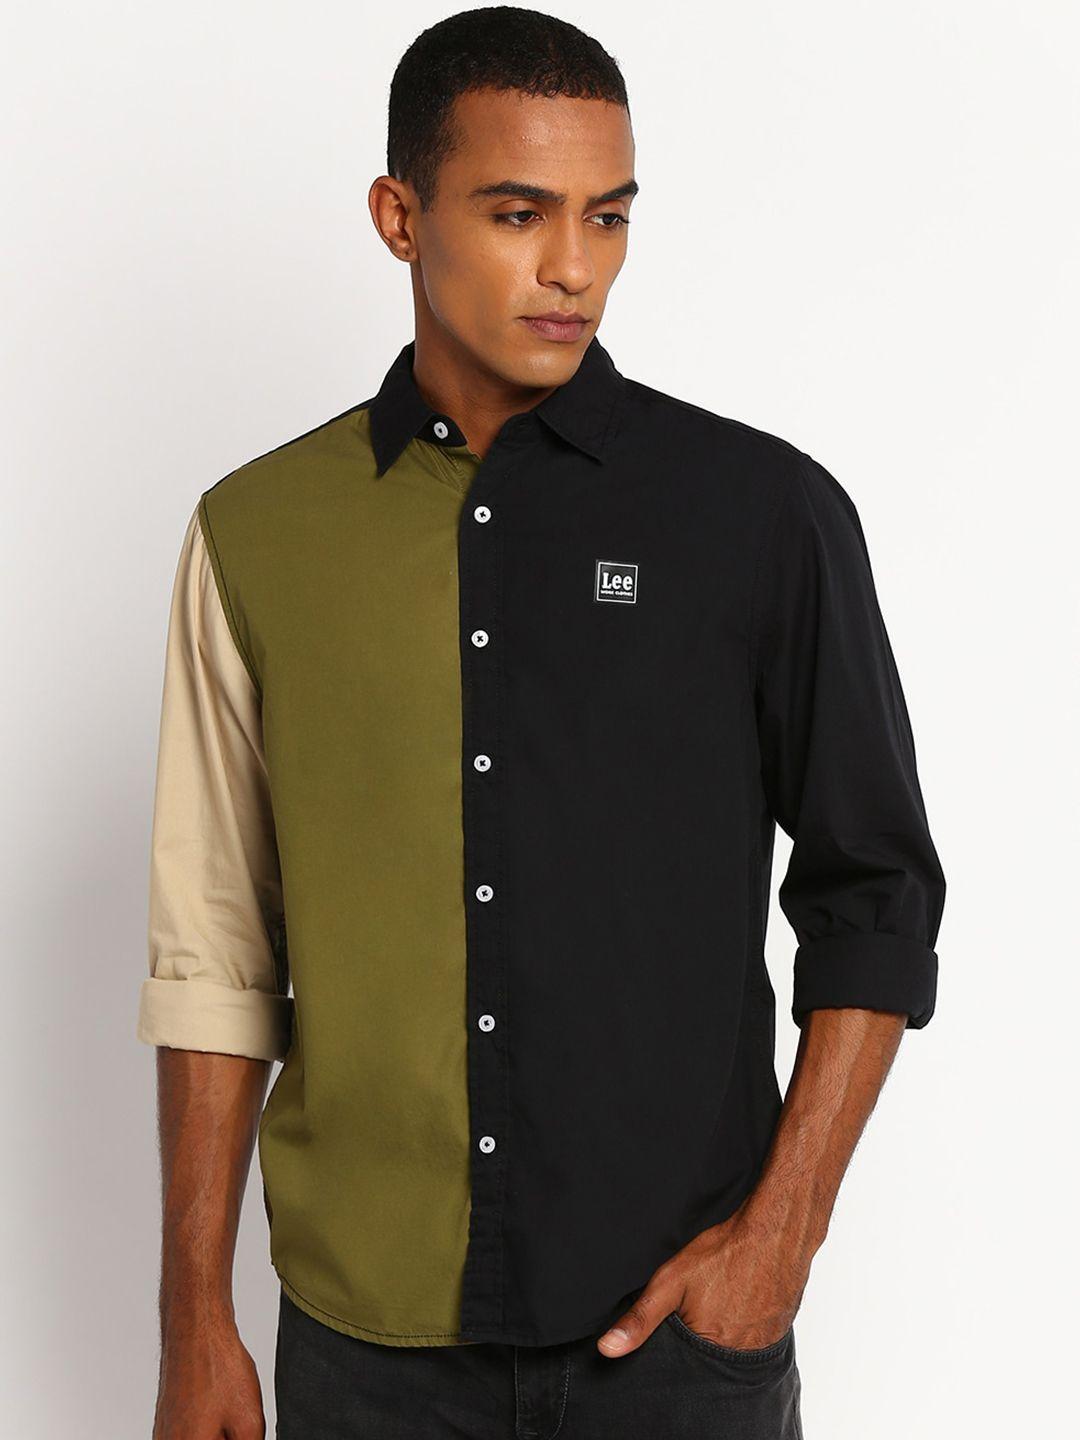 lee men black & olive green classic colourblocked cotton casual shirt